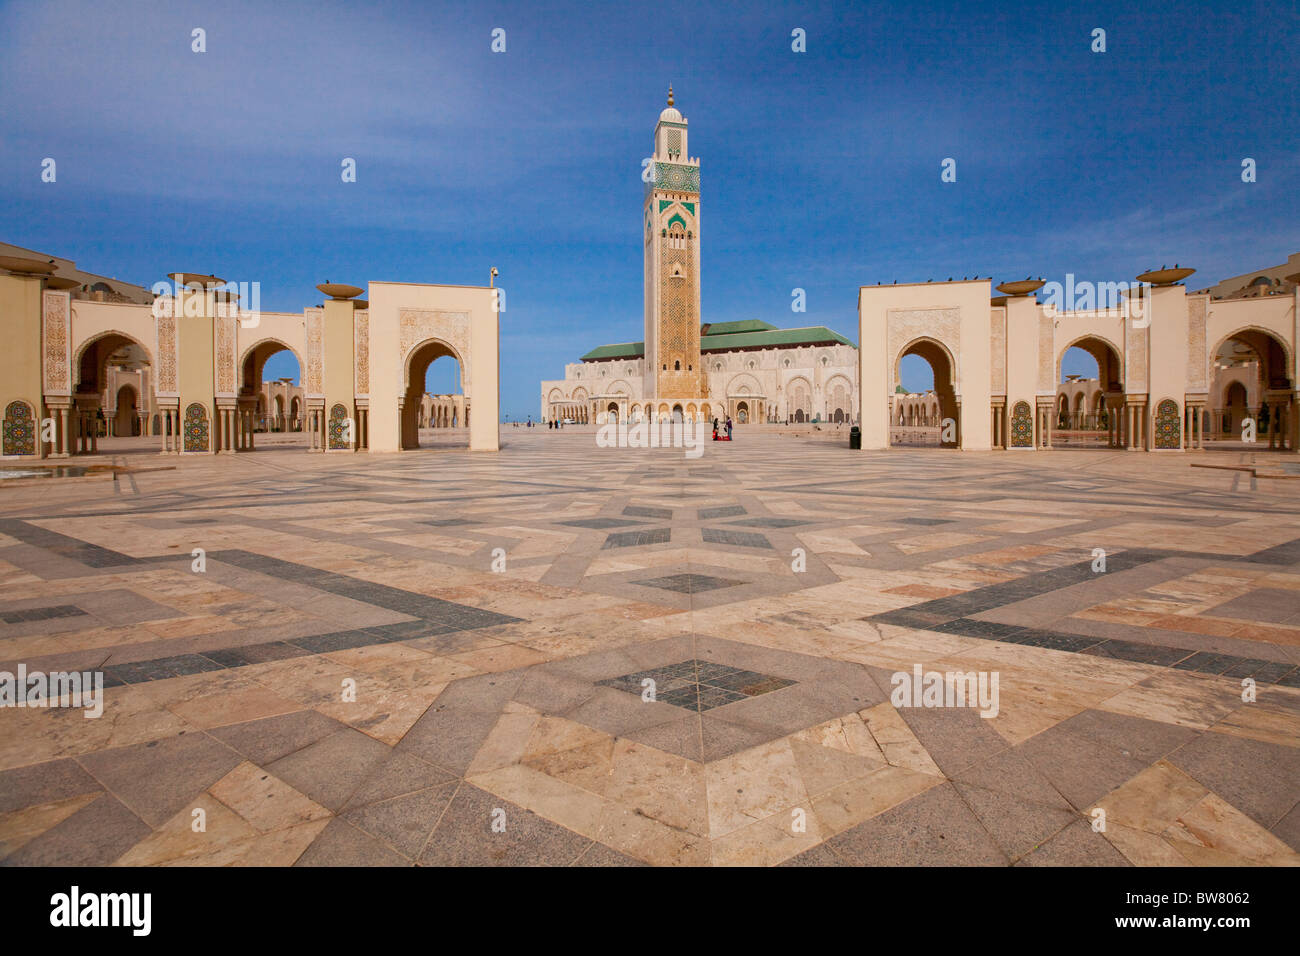 The seaside Hassan II mosque in Casablanca, Morocco. Stock Photo